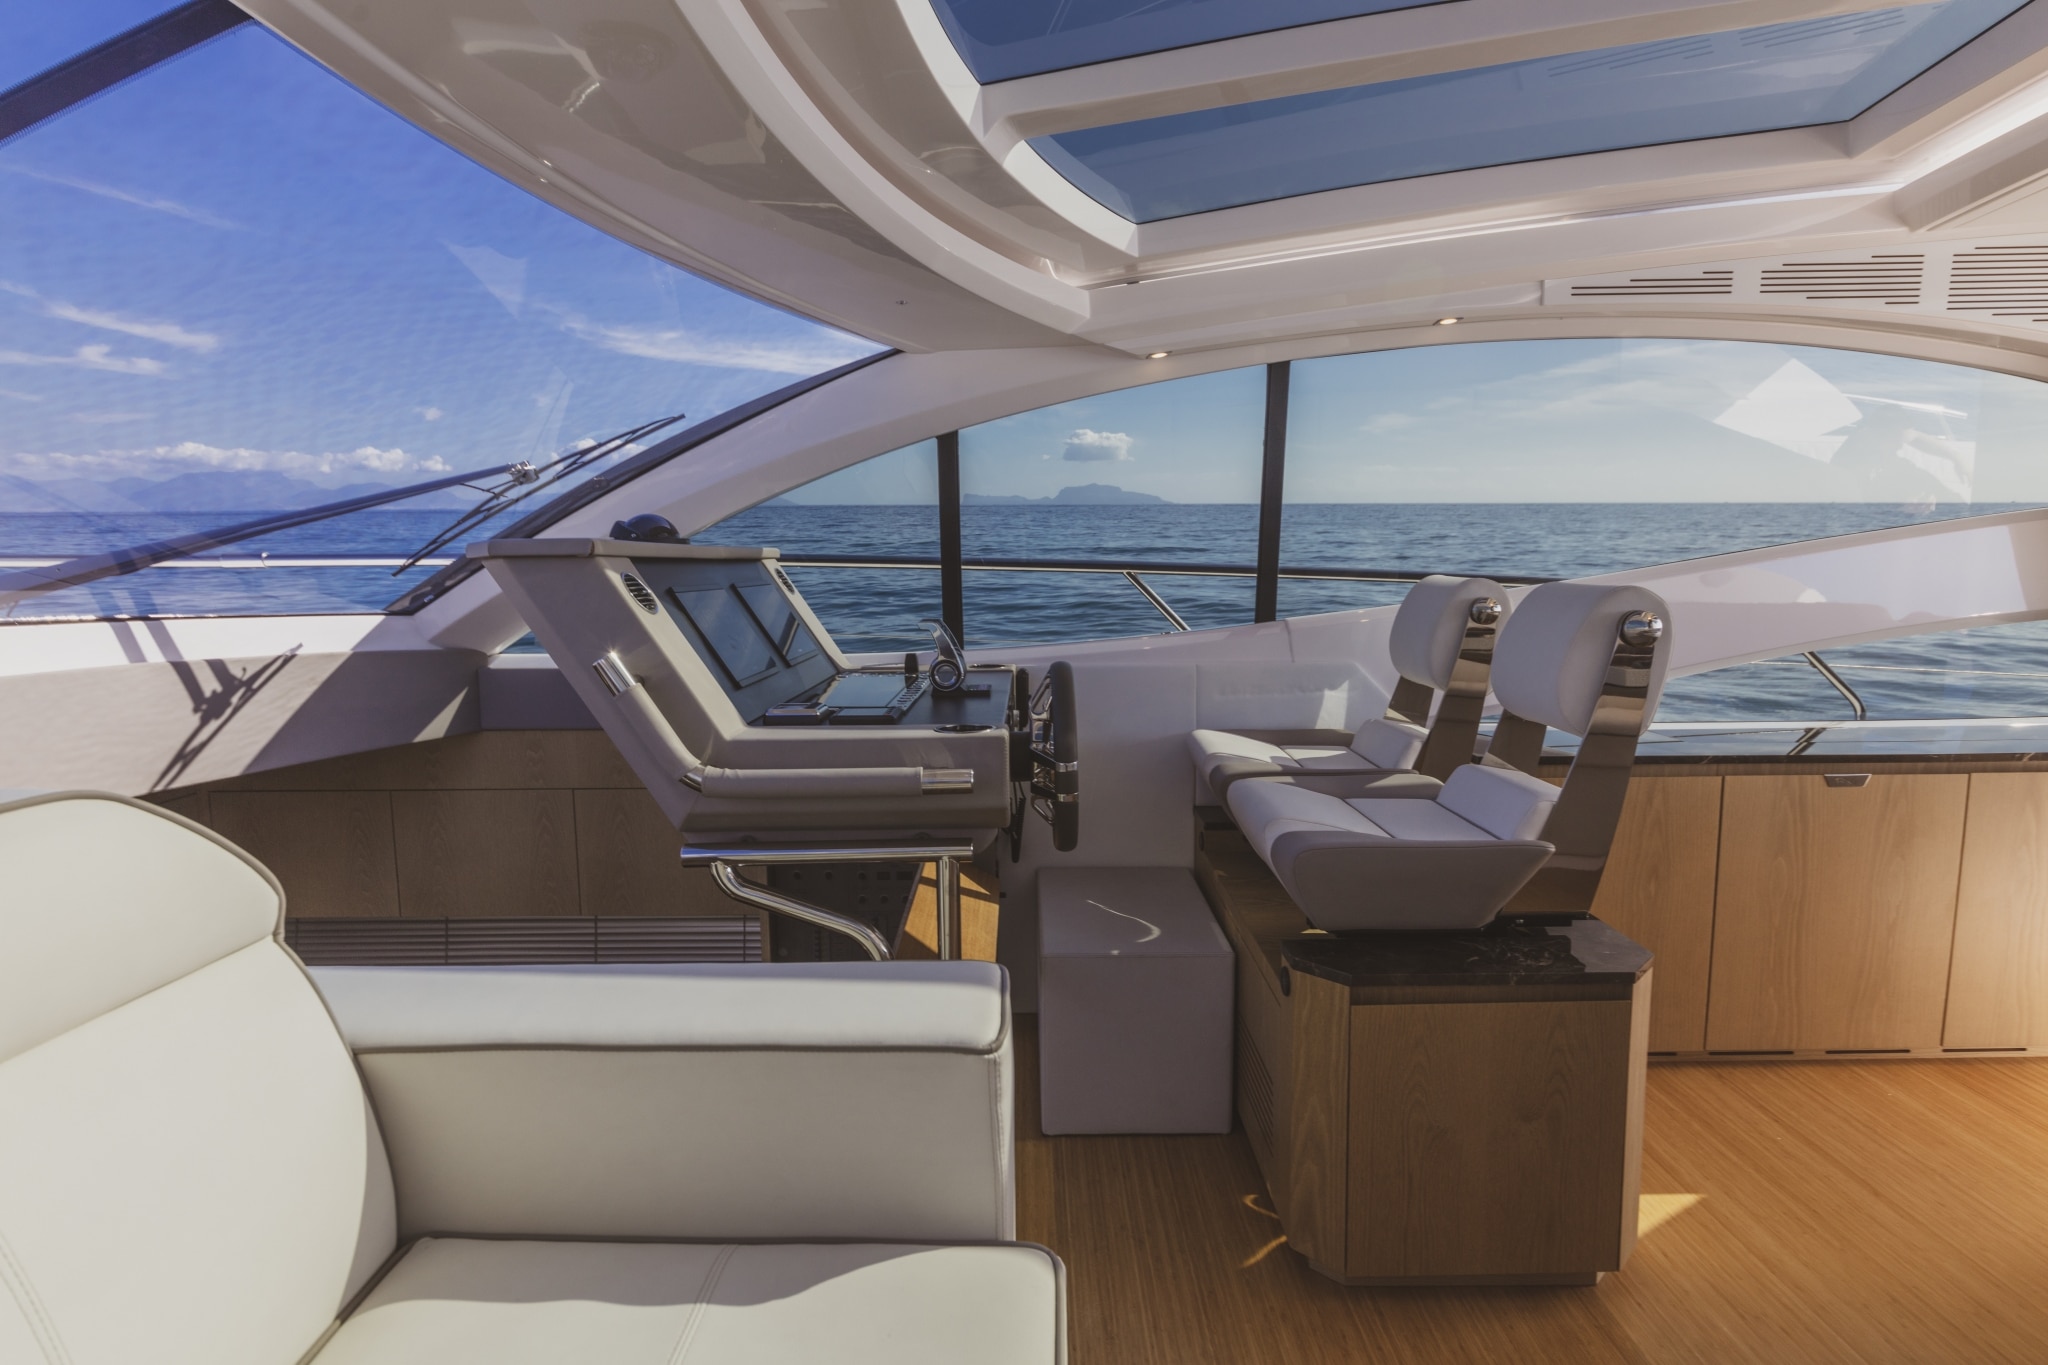 Wollsdorf premium leather for luxury motor yachts